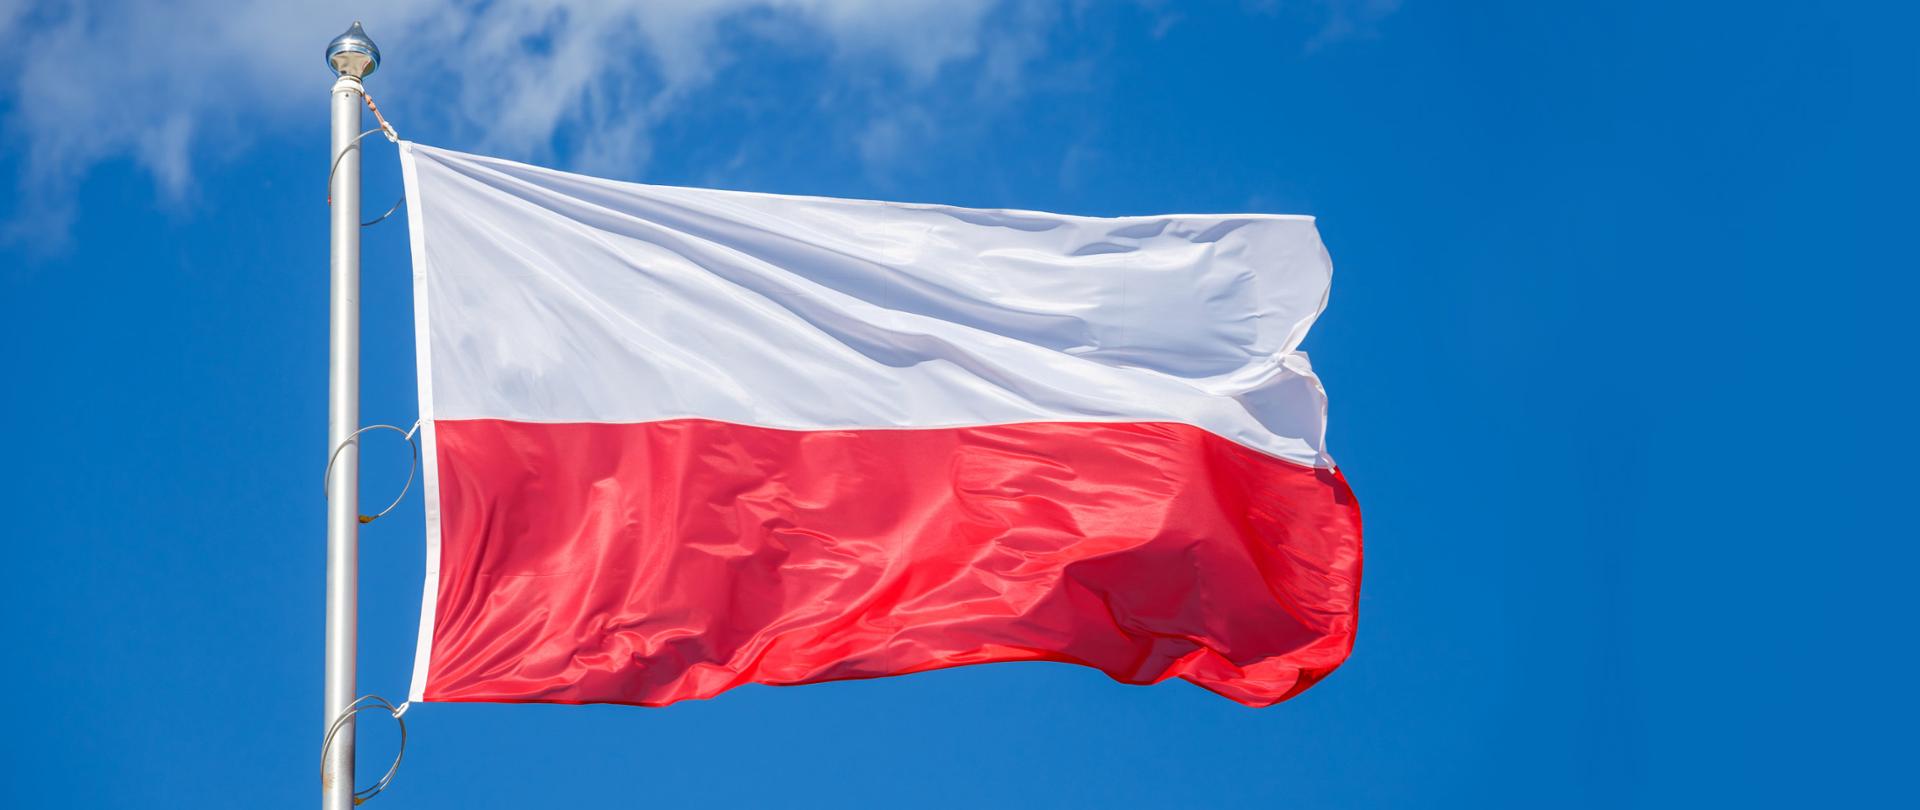 Polish flag on blue sky background